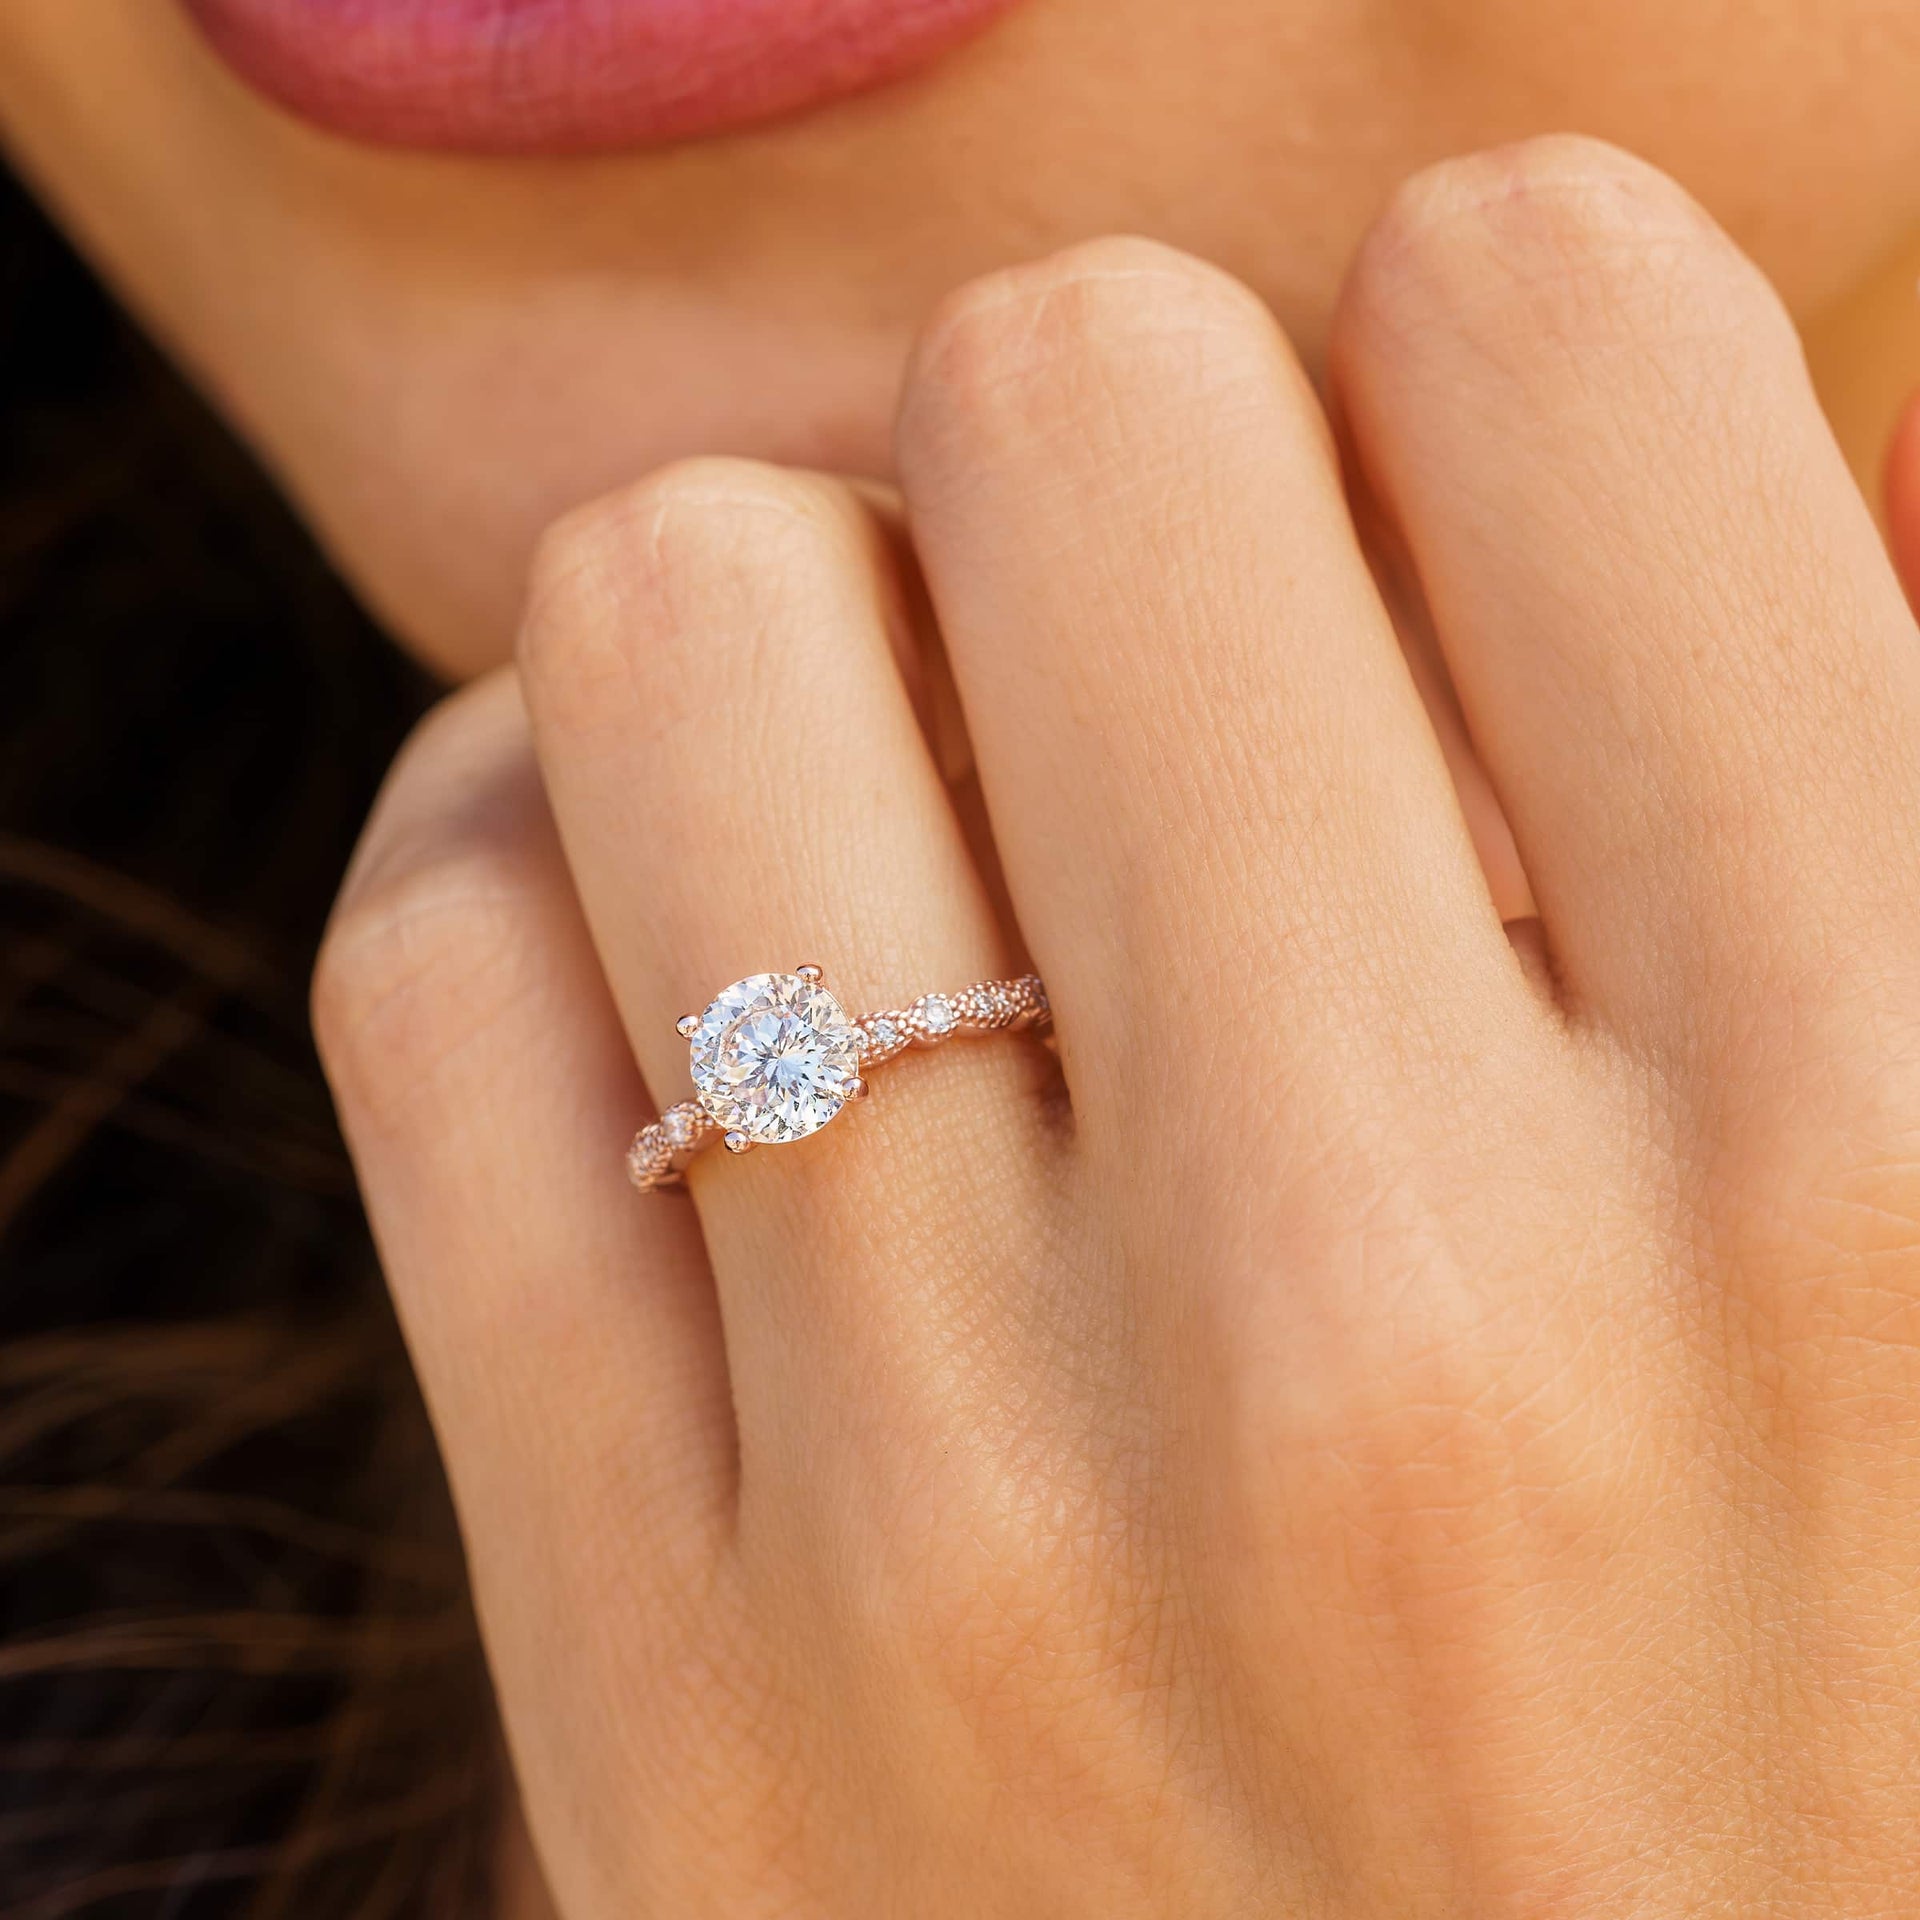 vintage rose gold engagement ring on woman's finger